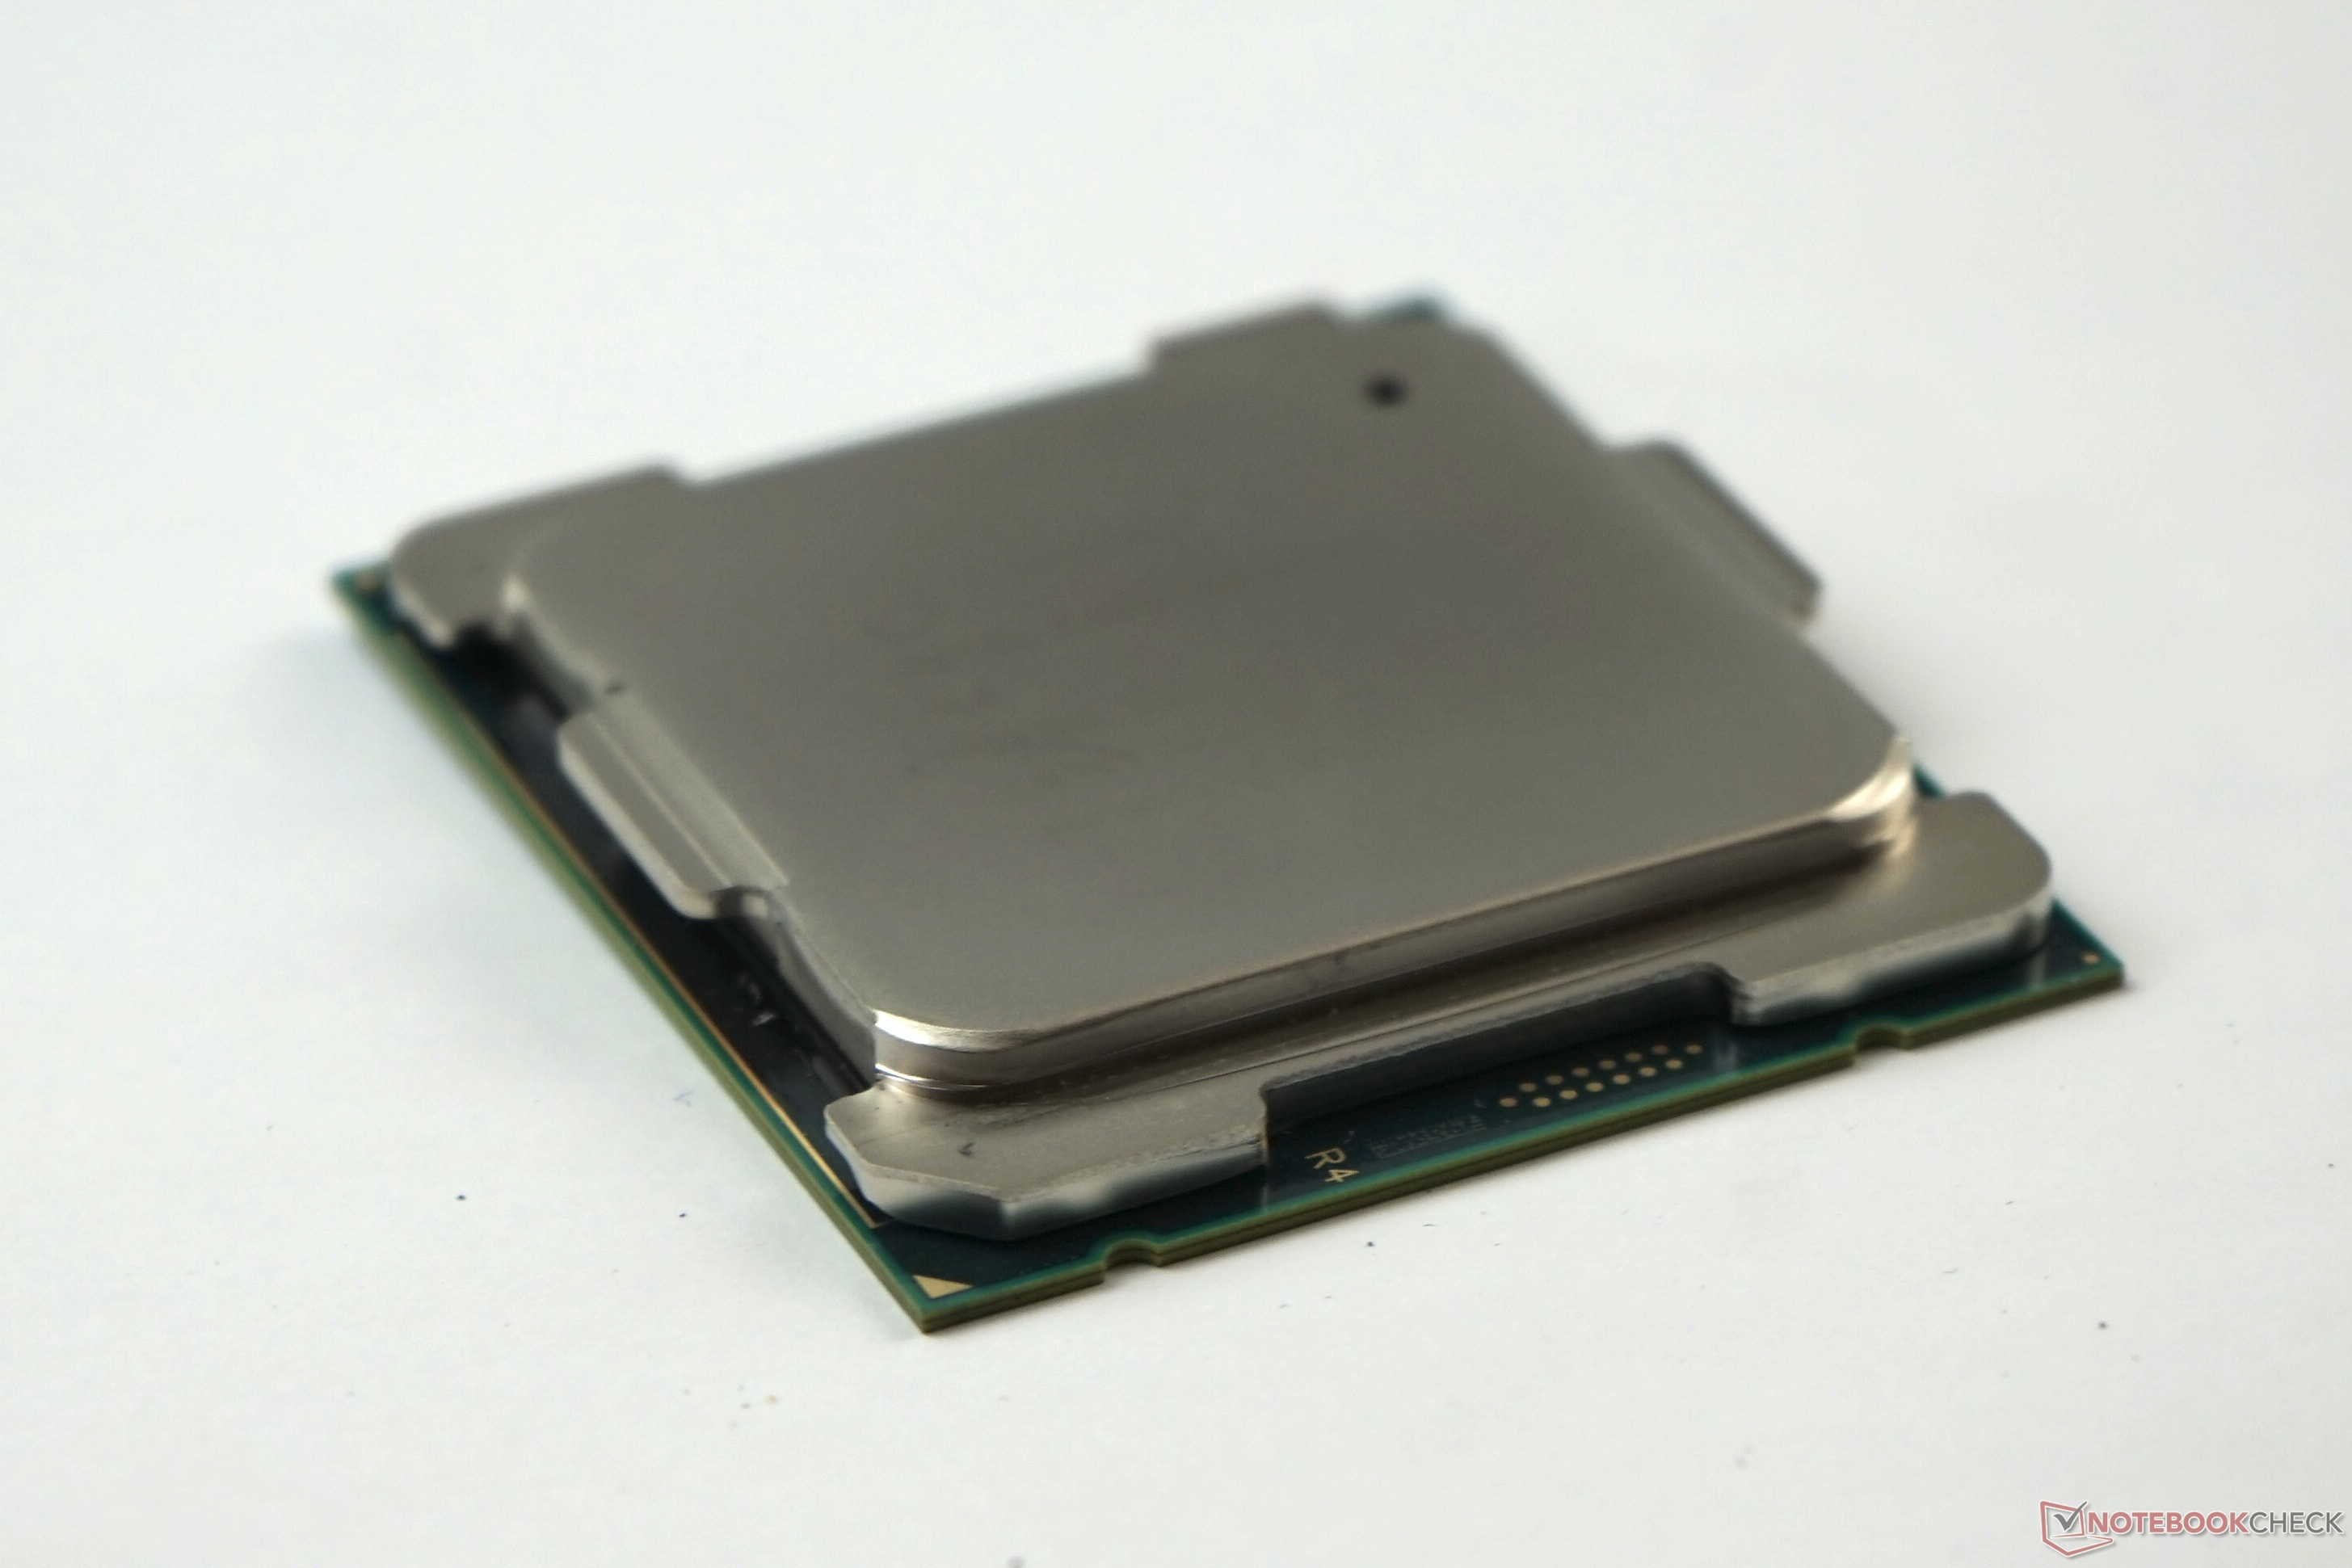 Intel Core I9 xe Desktop Cpu Benchmarks And Specs Notebookcheck Net Tech